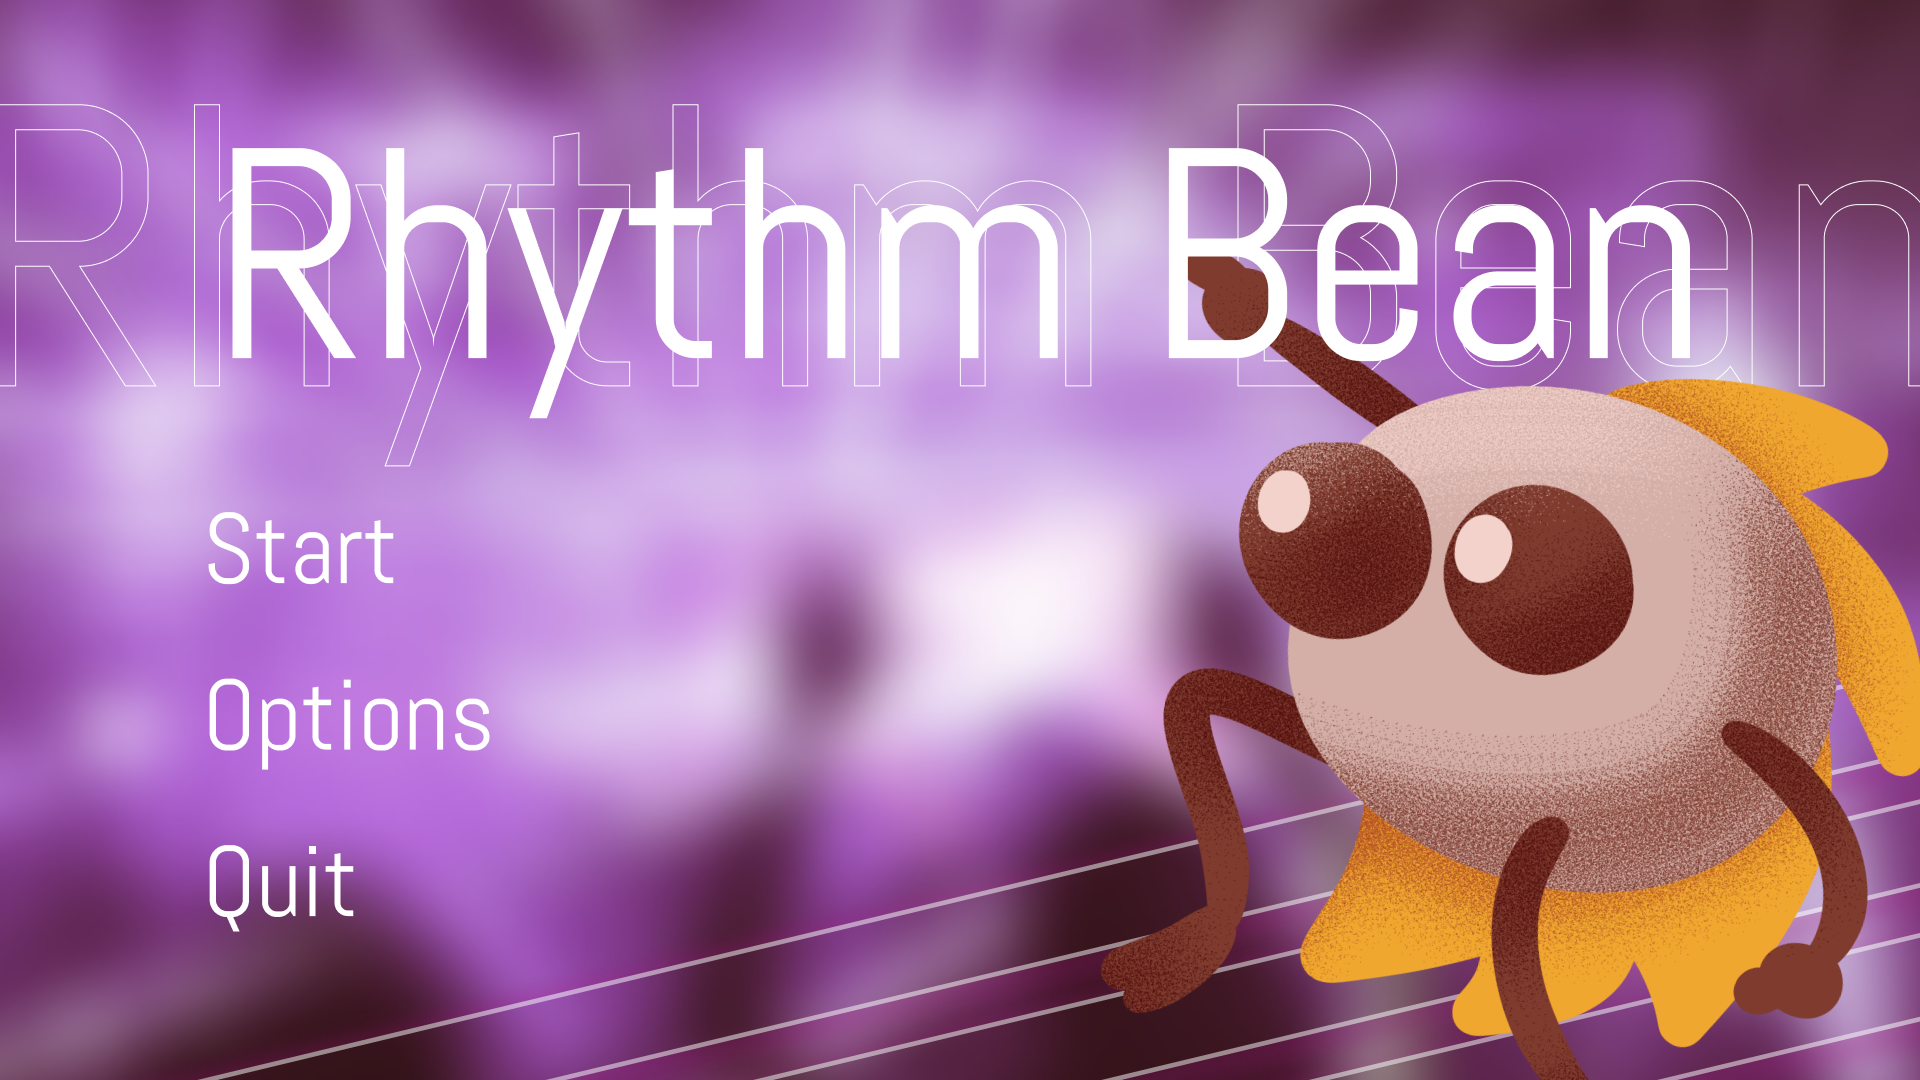 Rhythm Bean